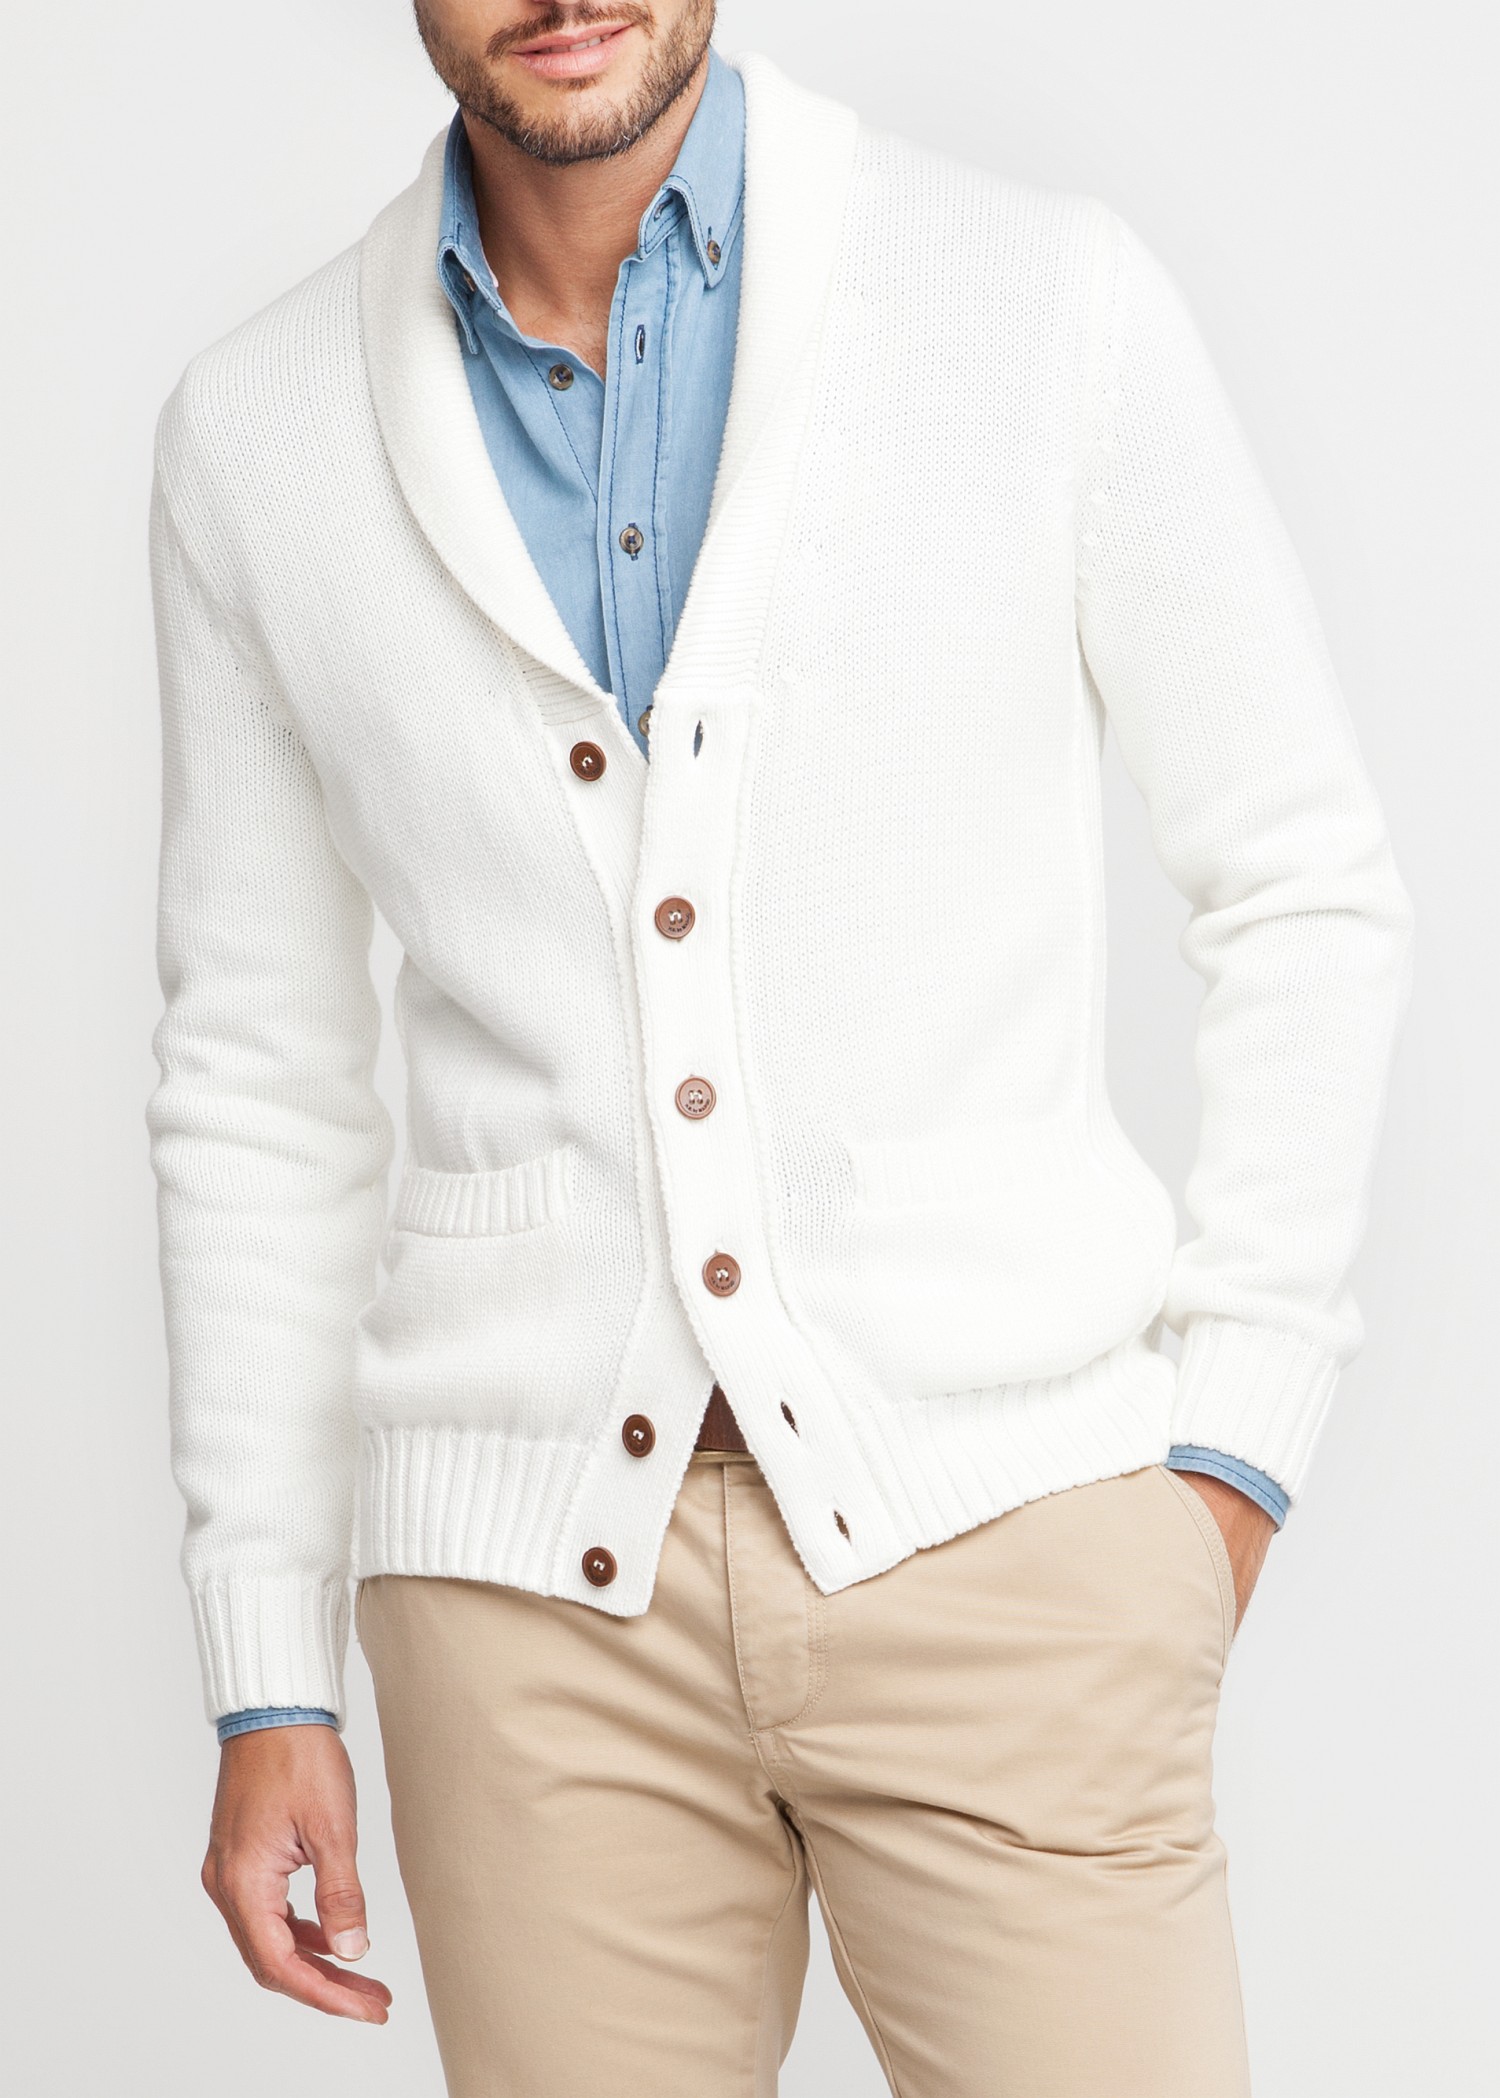 Mango Shawl Collar Cotton Cardigan in White for Men - Lyst